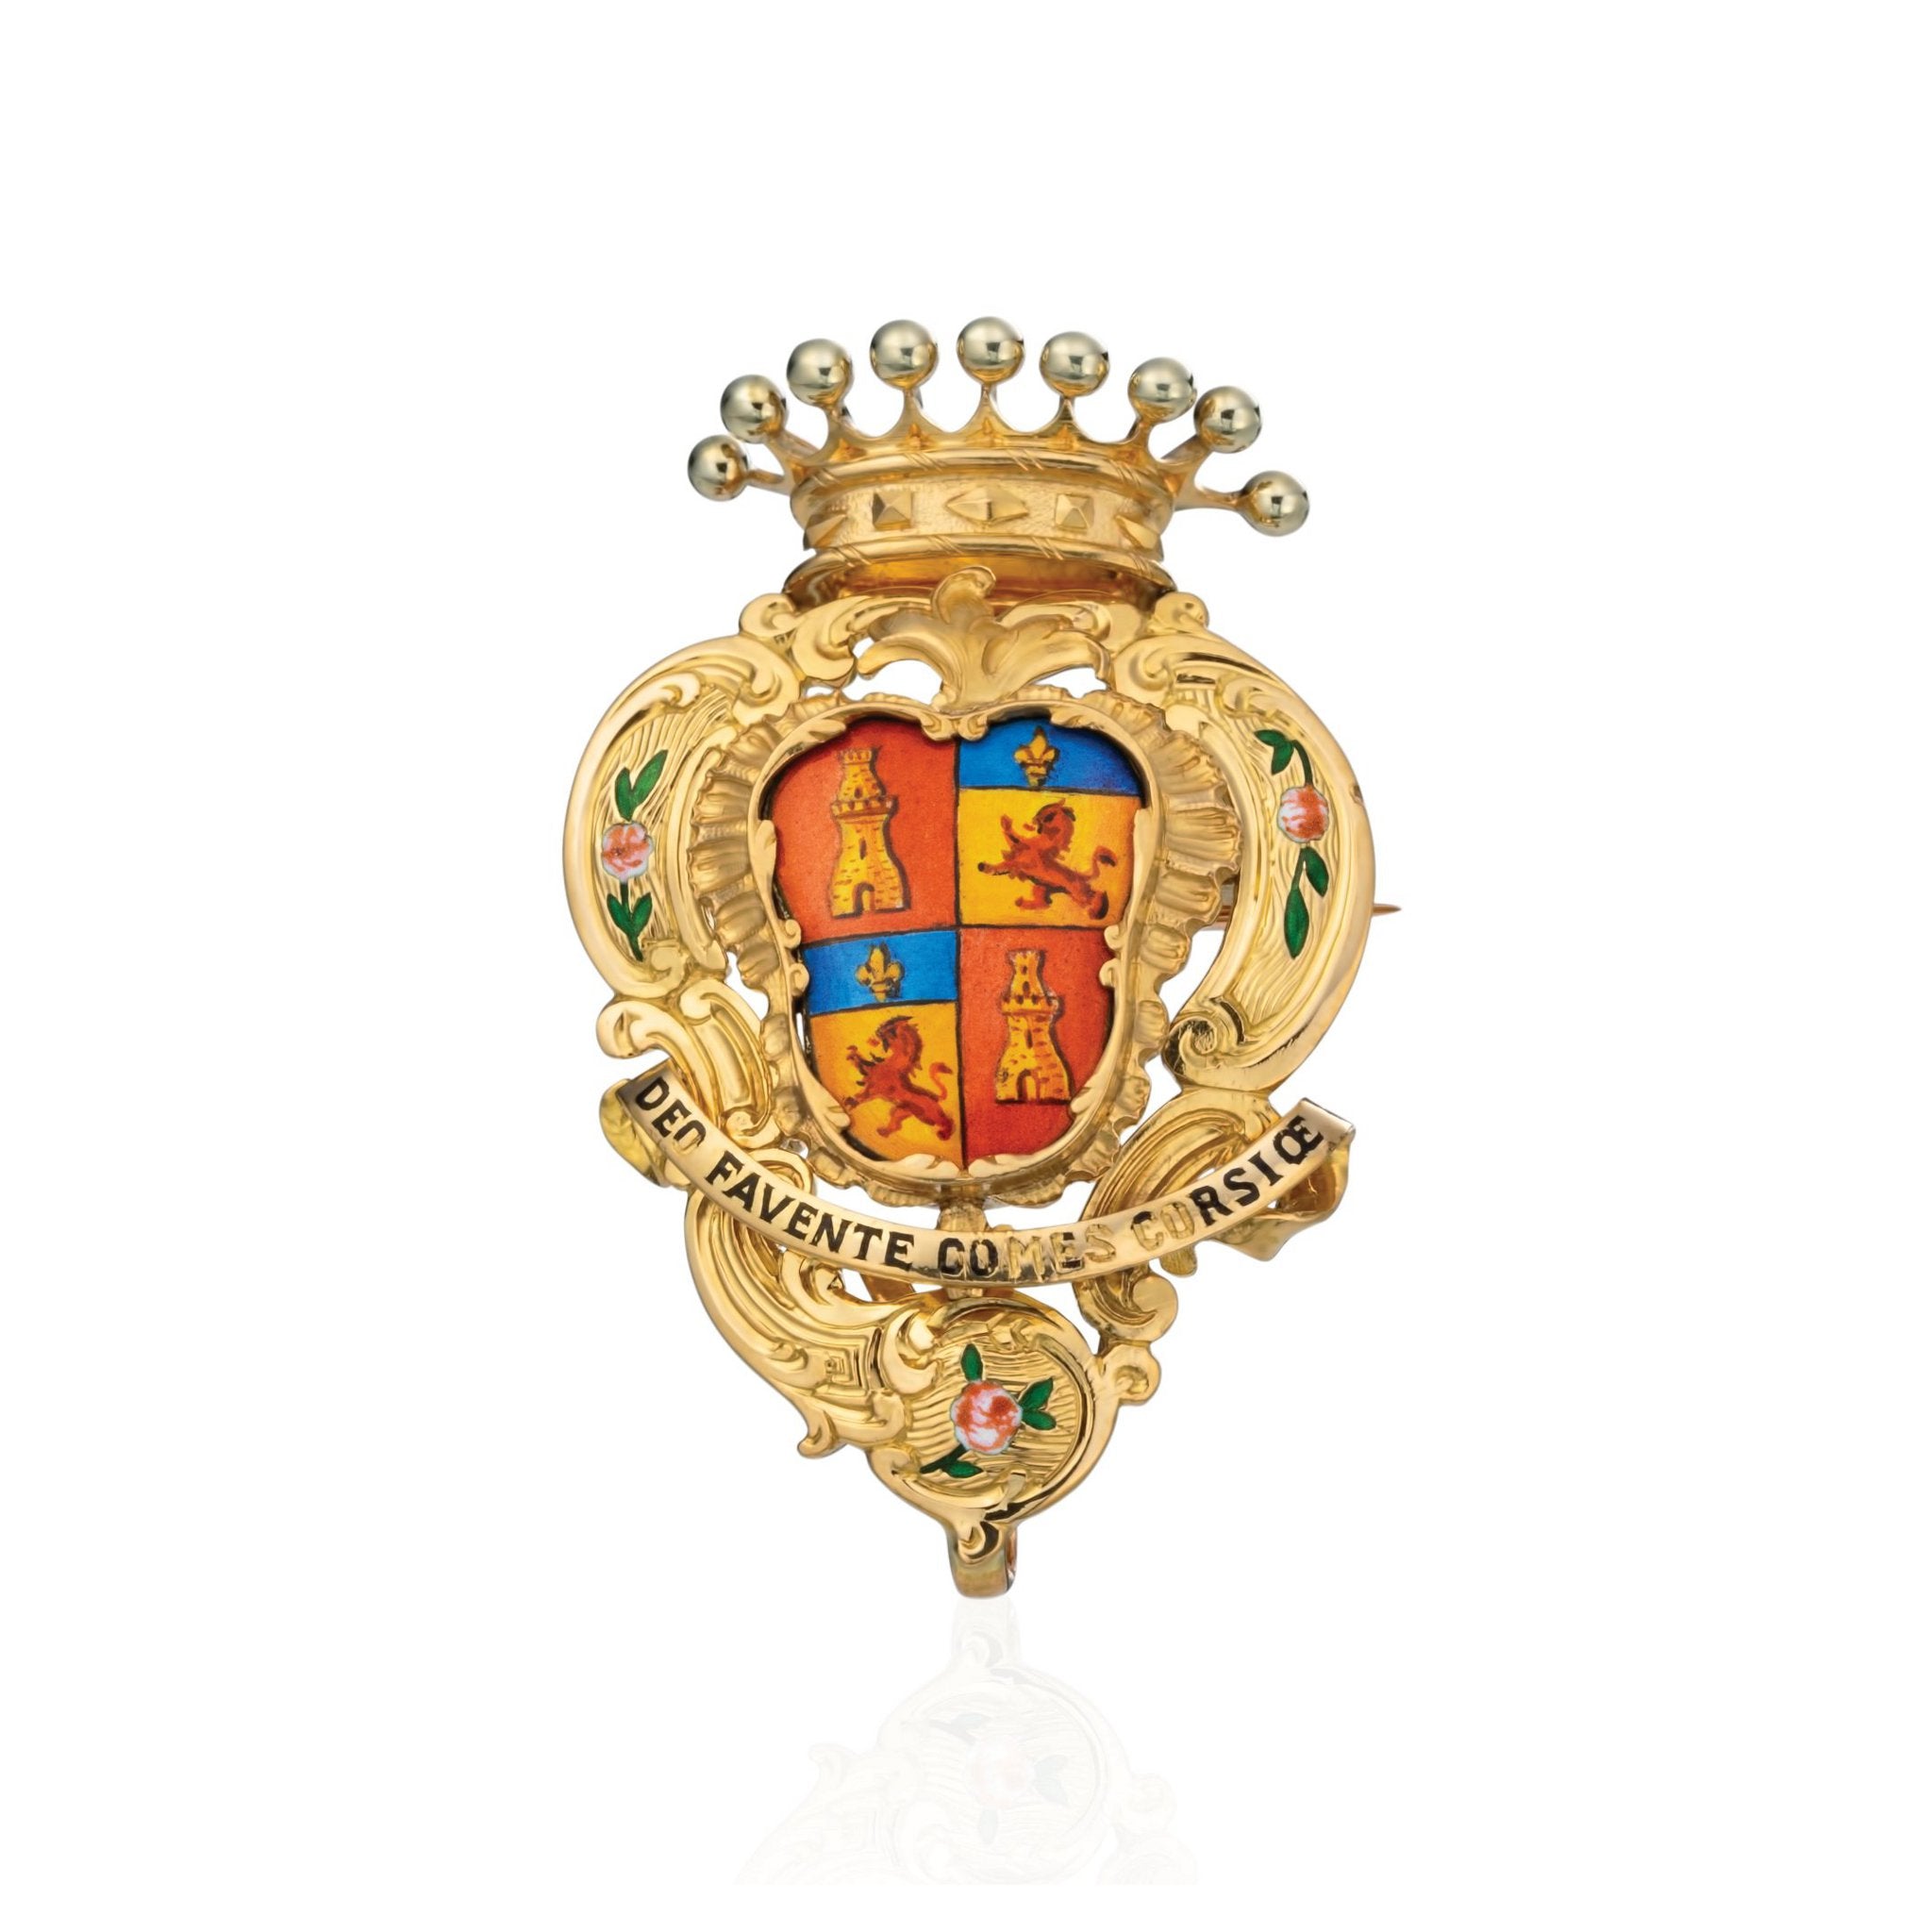 Vintage Heraldic Crest Brooch in 14k Gold and Enamel